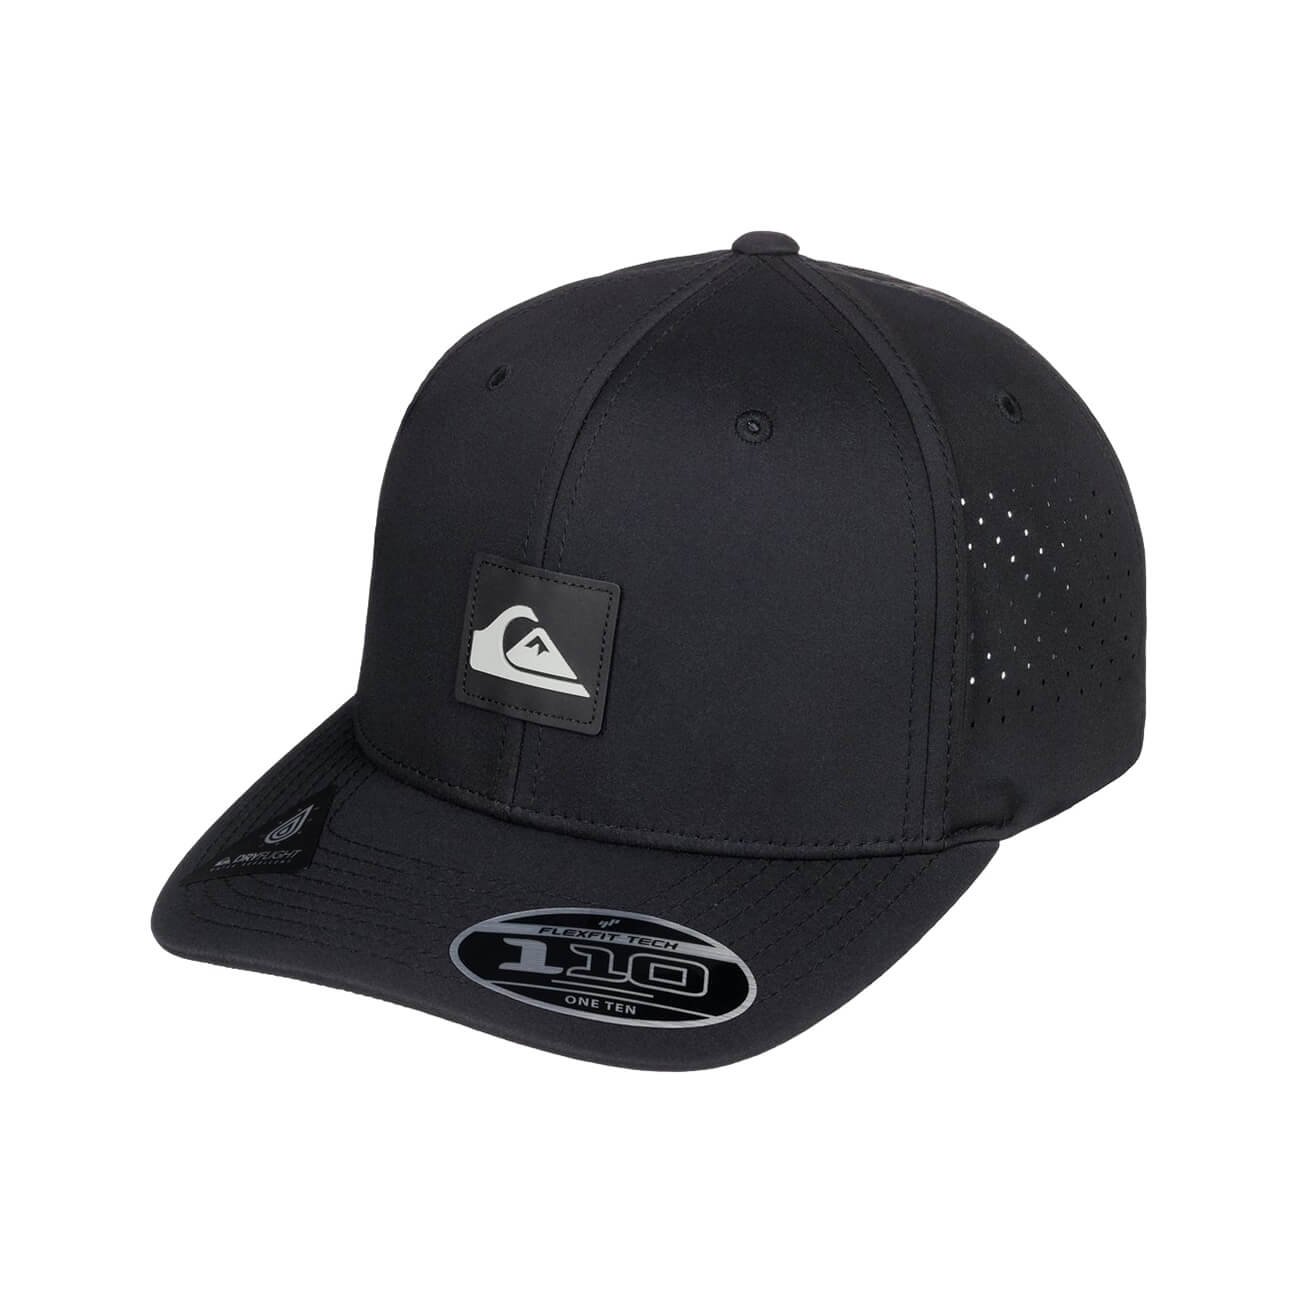 Quiksilver Adapted Şapka - Siyah - 1